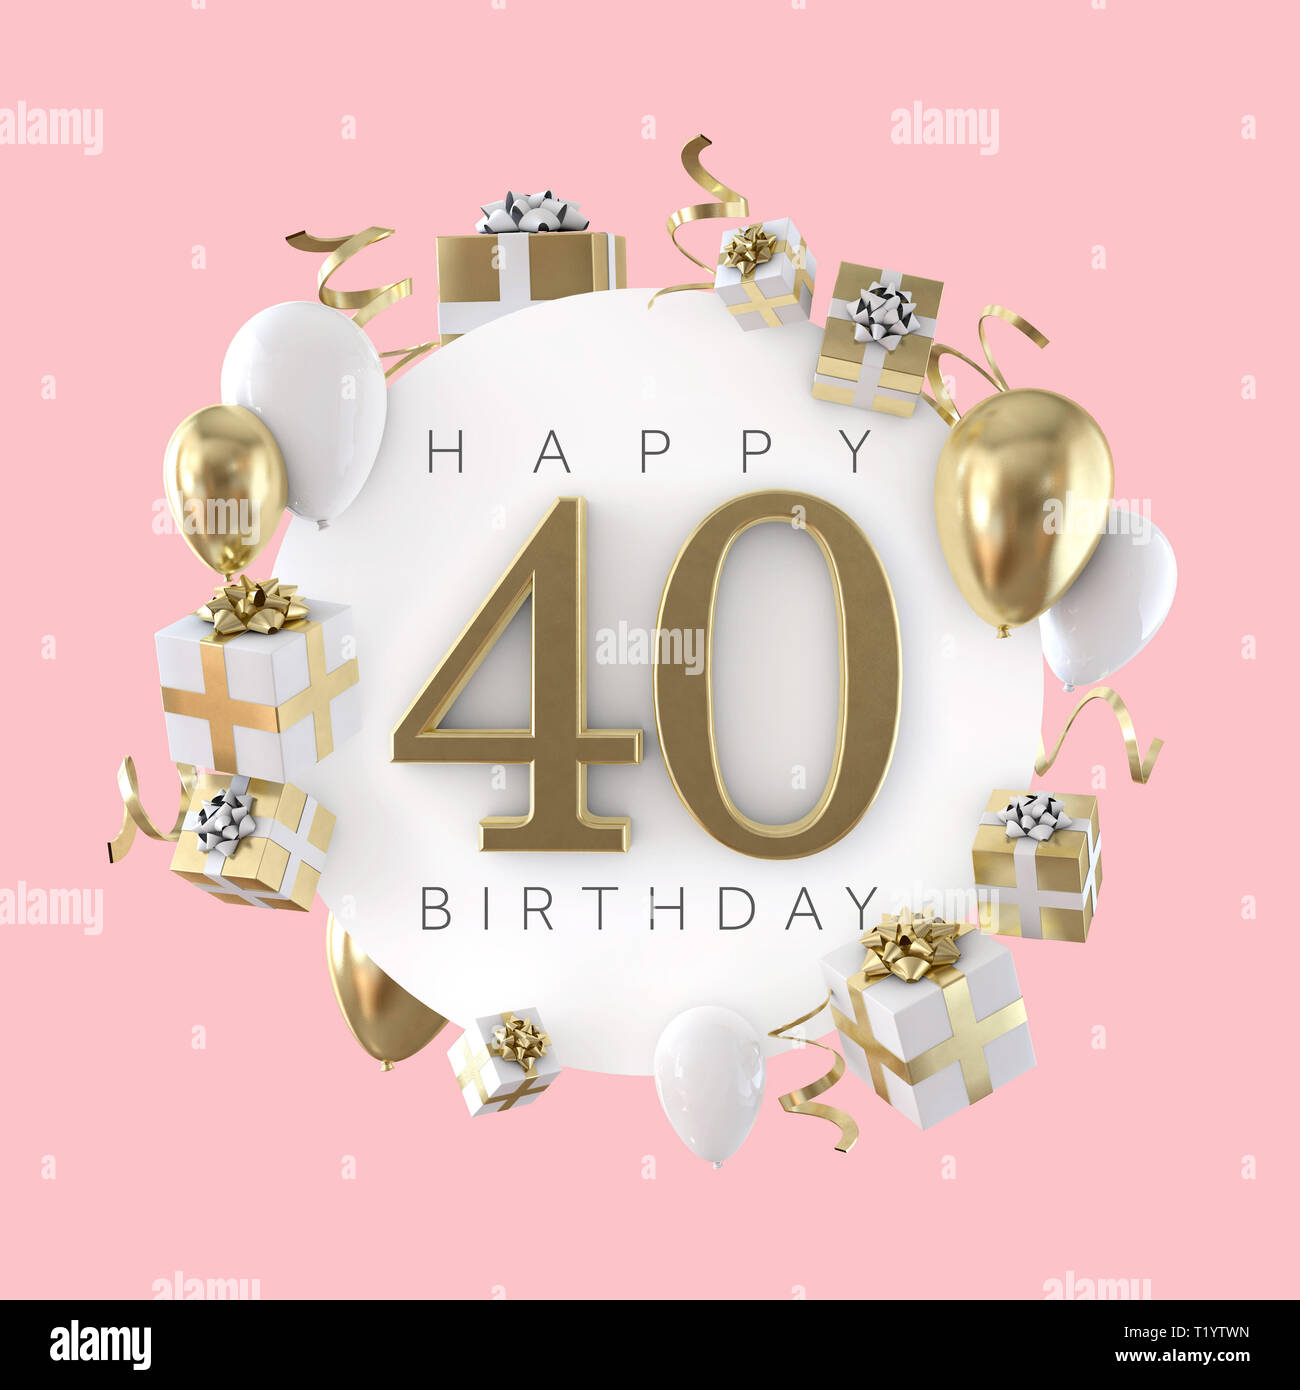 duidelijkheid Markeer Ga lekker liggen Happy 40th birthday party composition with balloons and presents. 3D Render  Stock Photo - Alamy